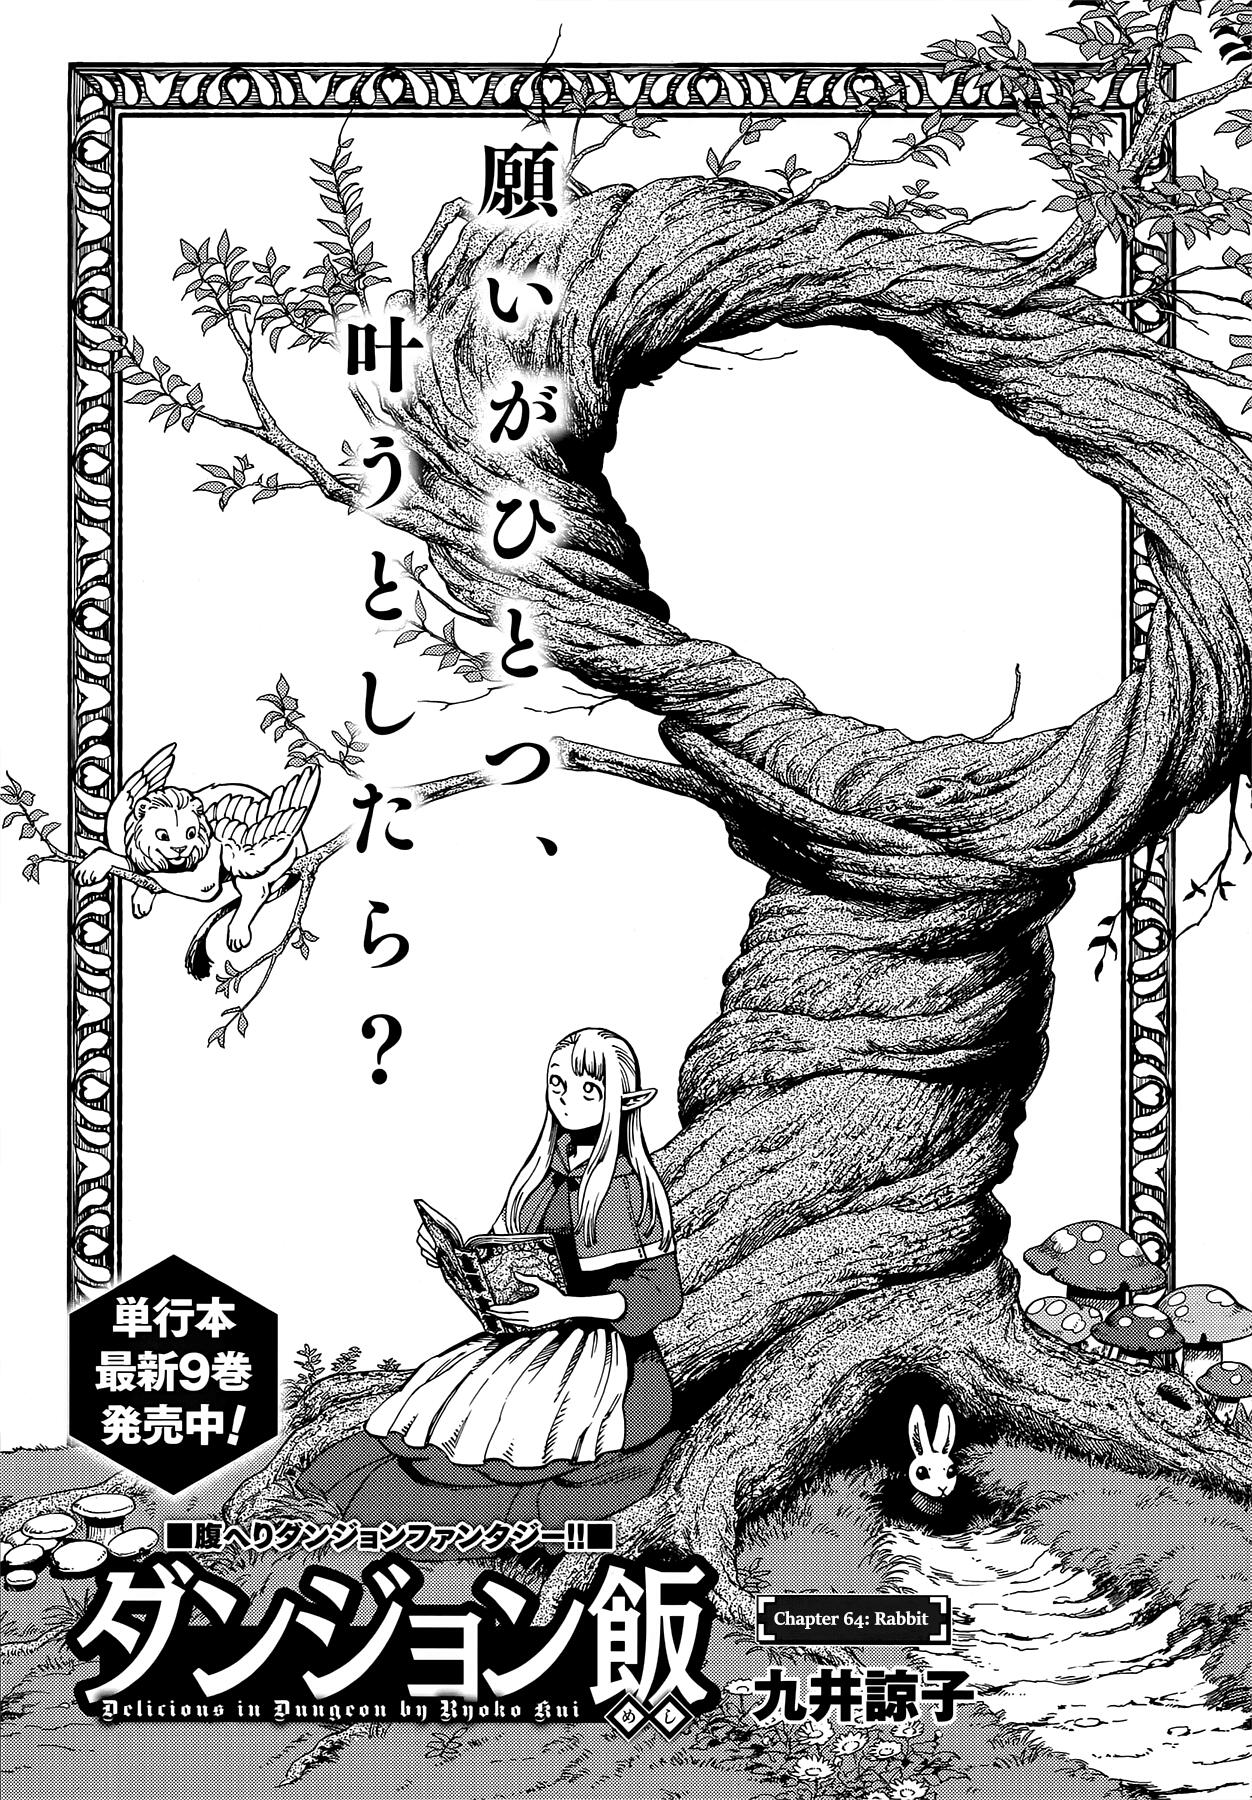 Dungeon Meshi Chapter 64: Rabbit page 1 - Mangakakalot